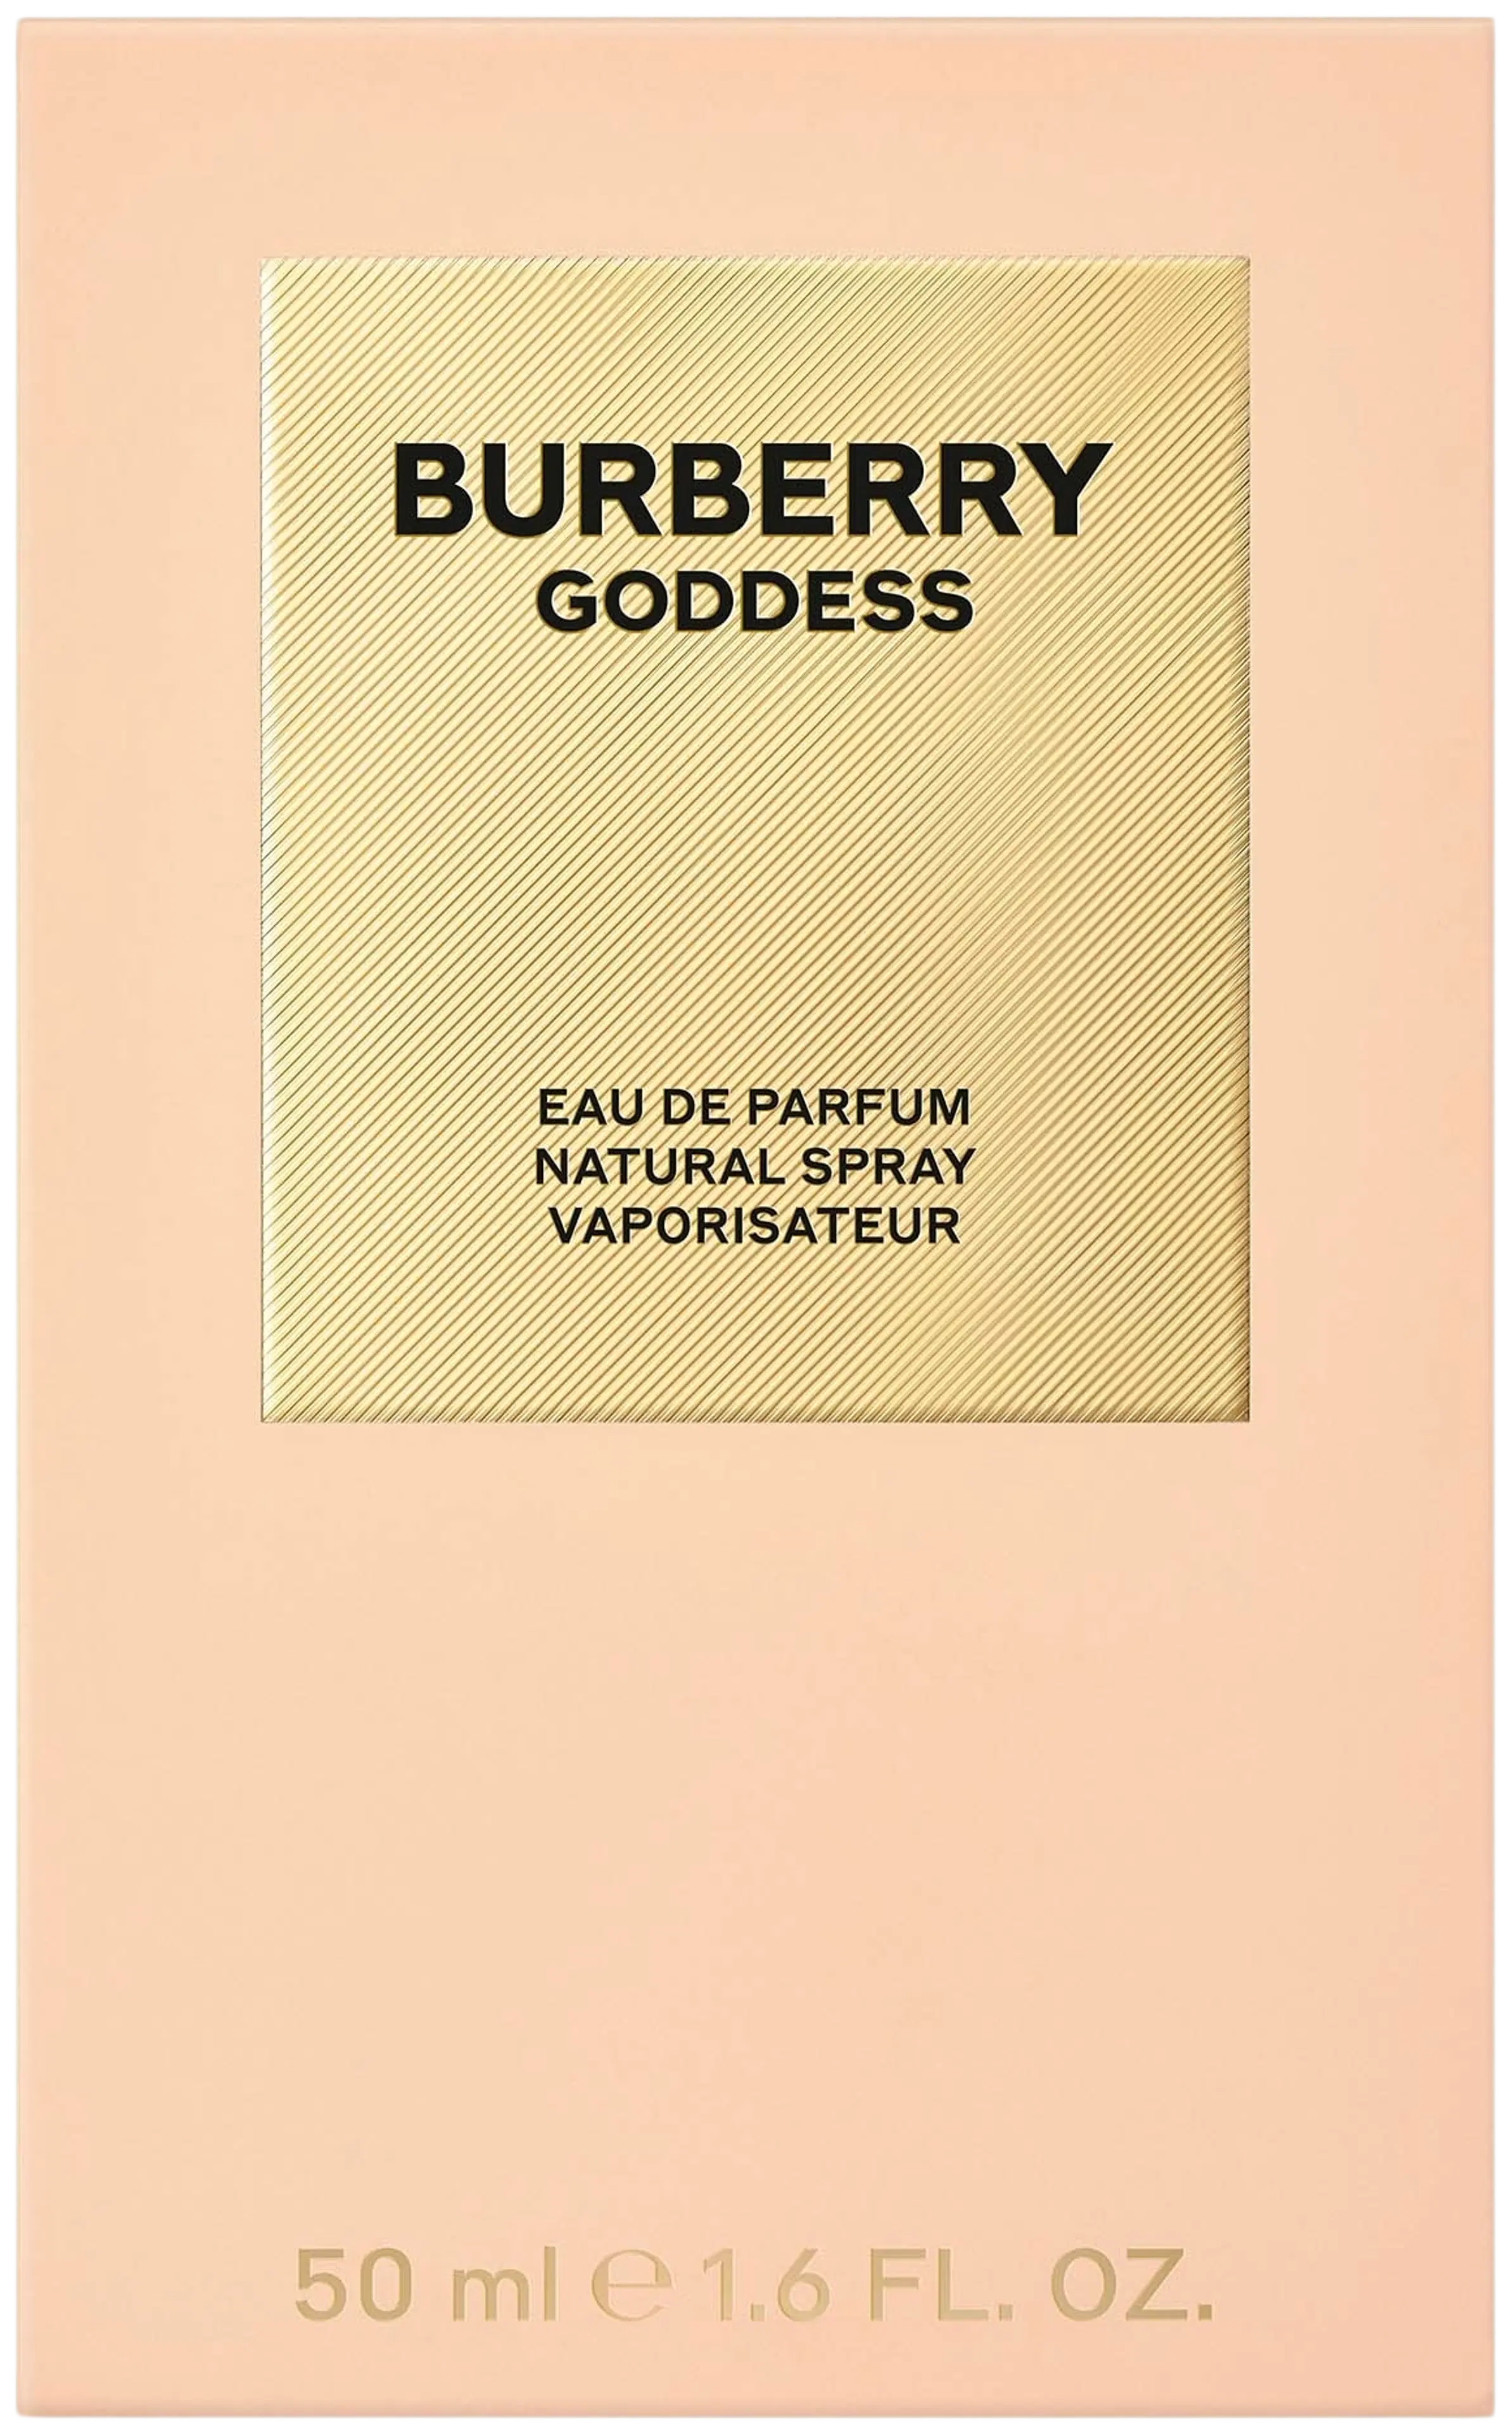 Burberry Goddess EdP tuoksu 50 ml